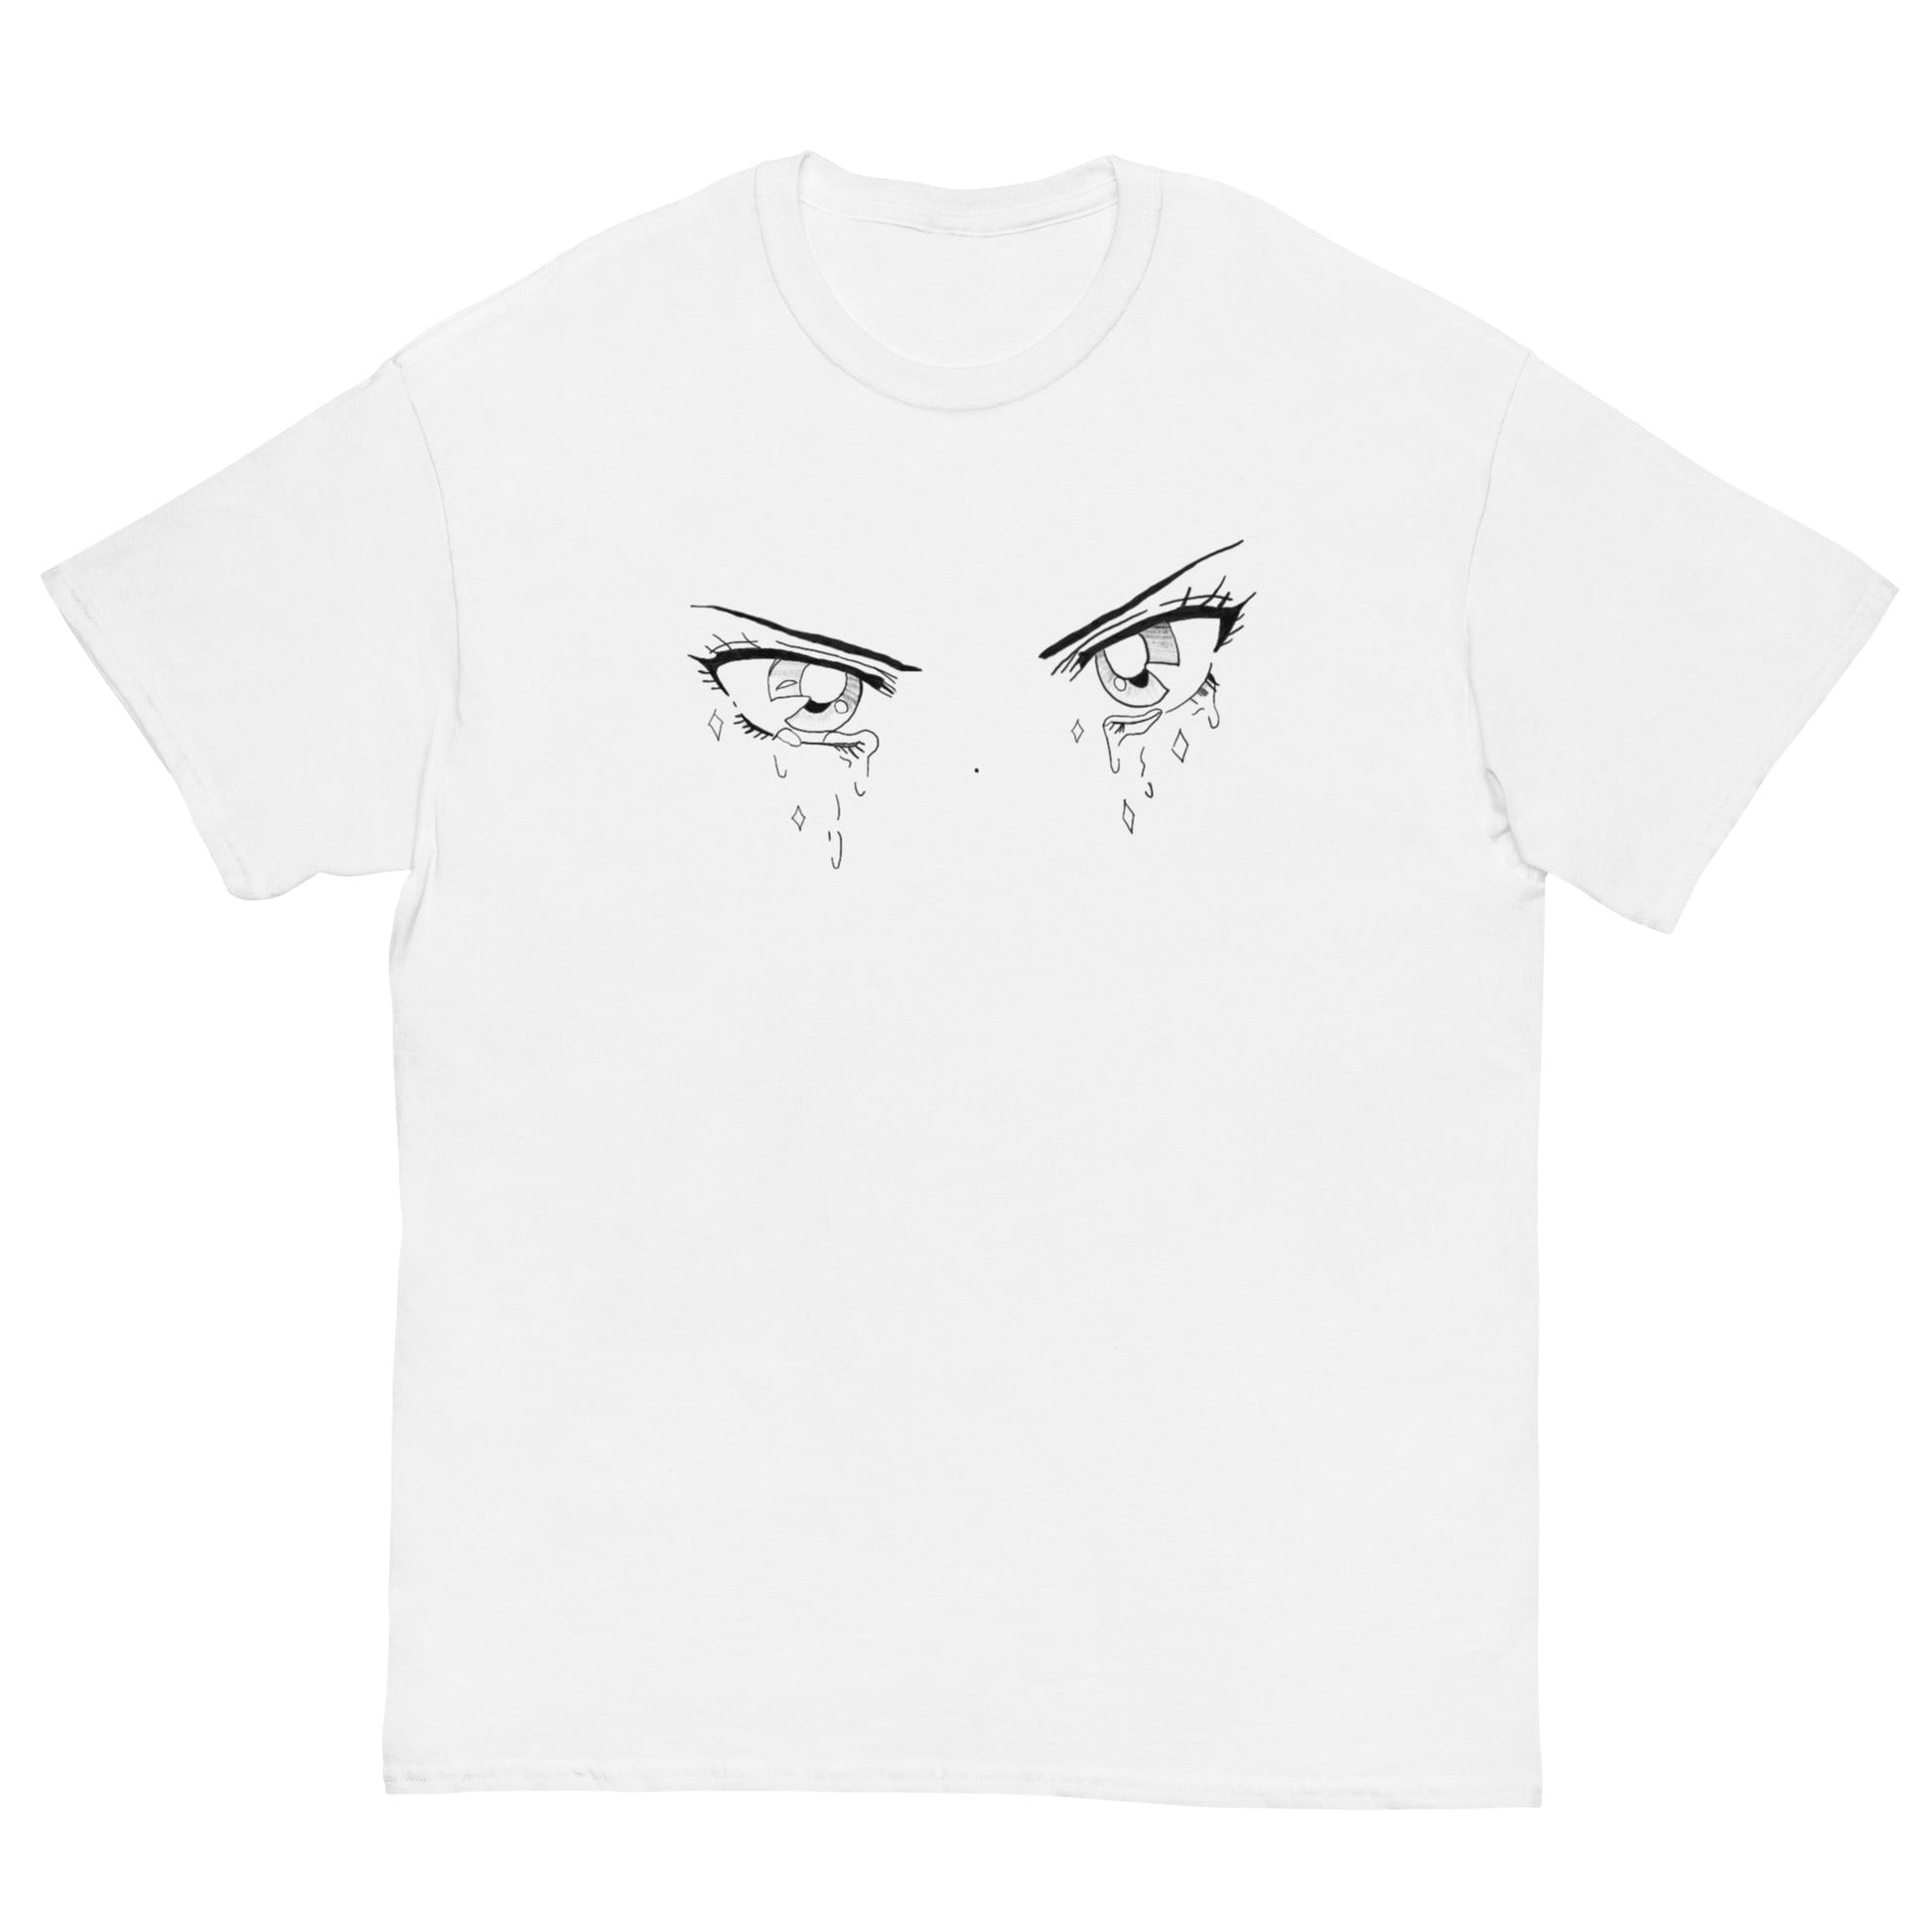 Sad Girls Eyes - T-Shirt - Project NuMa - T-Shirt